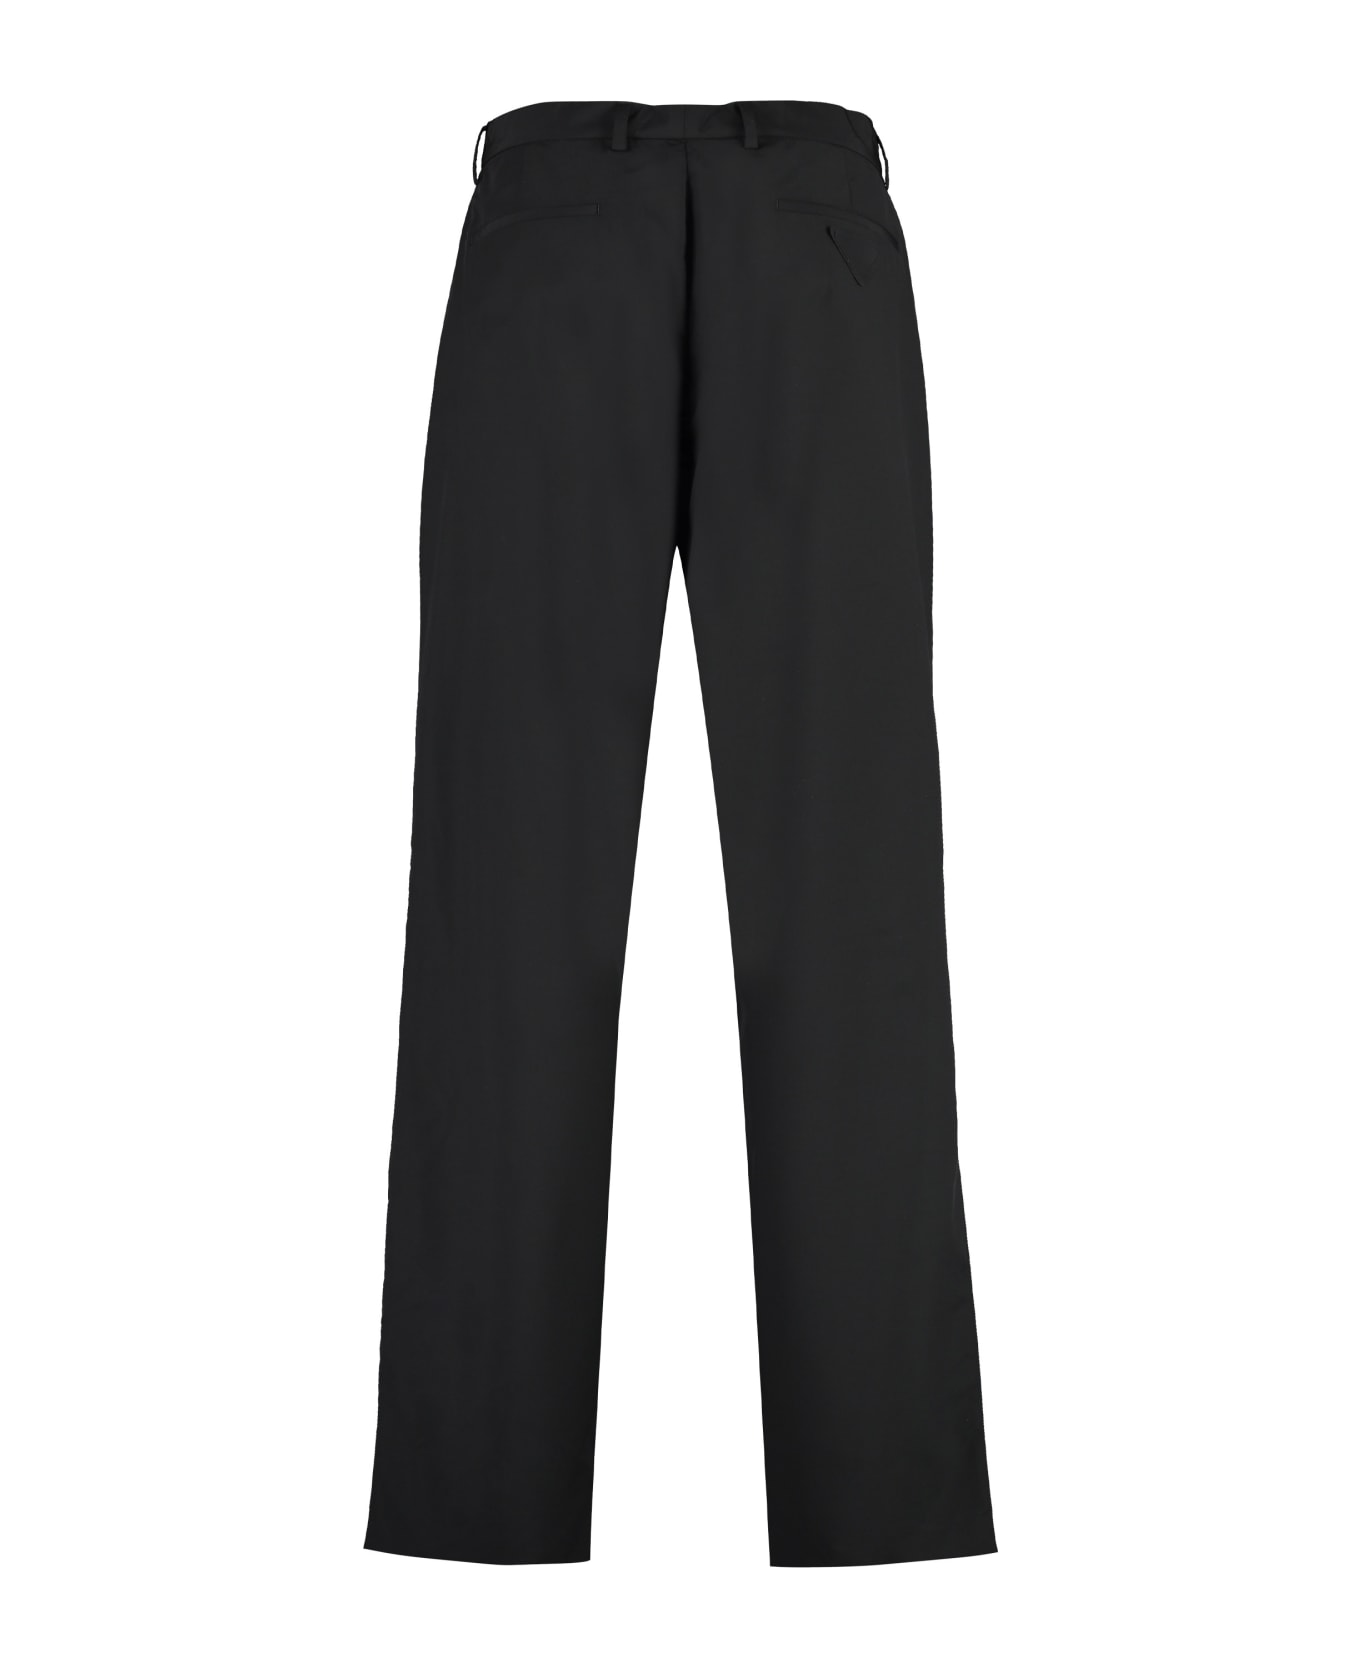 Prada Technical Fabric Pants - black